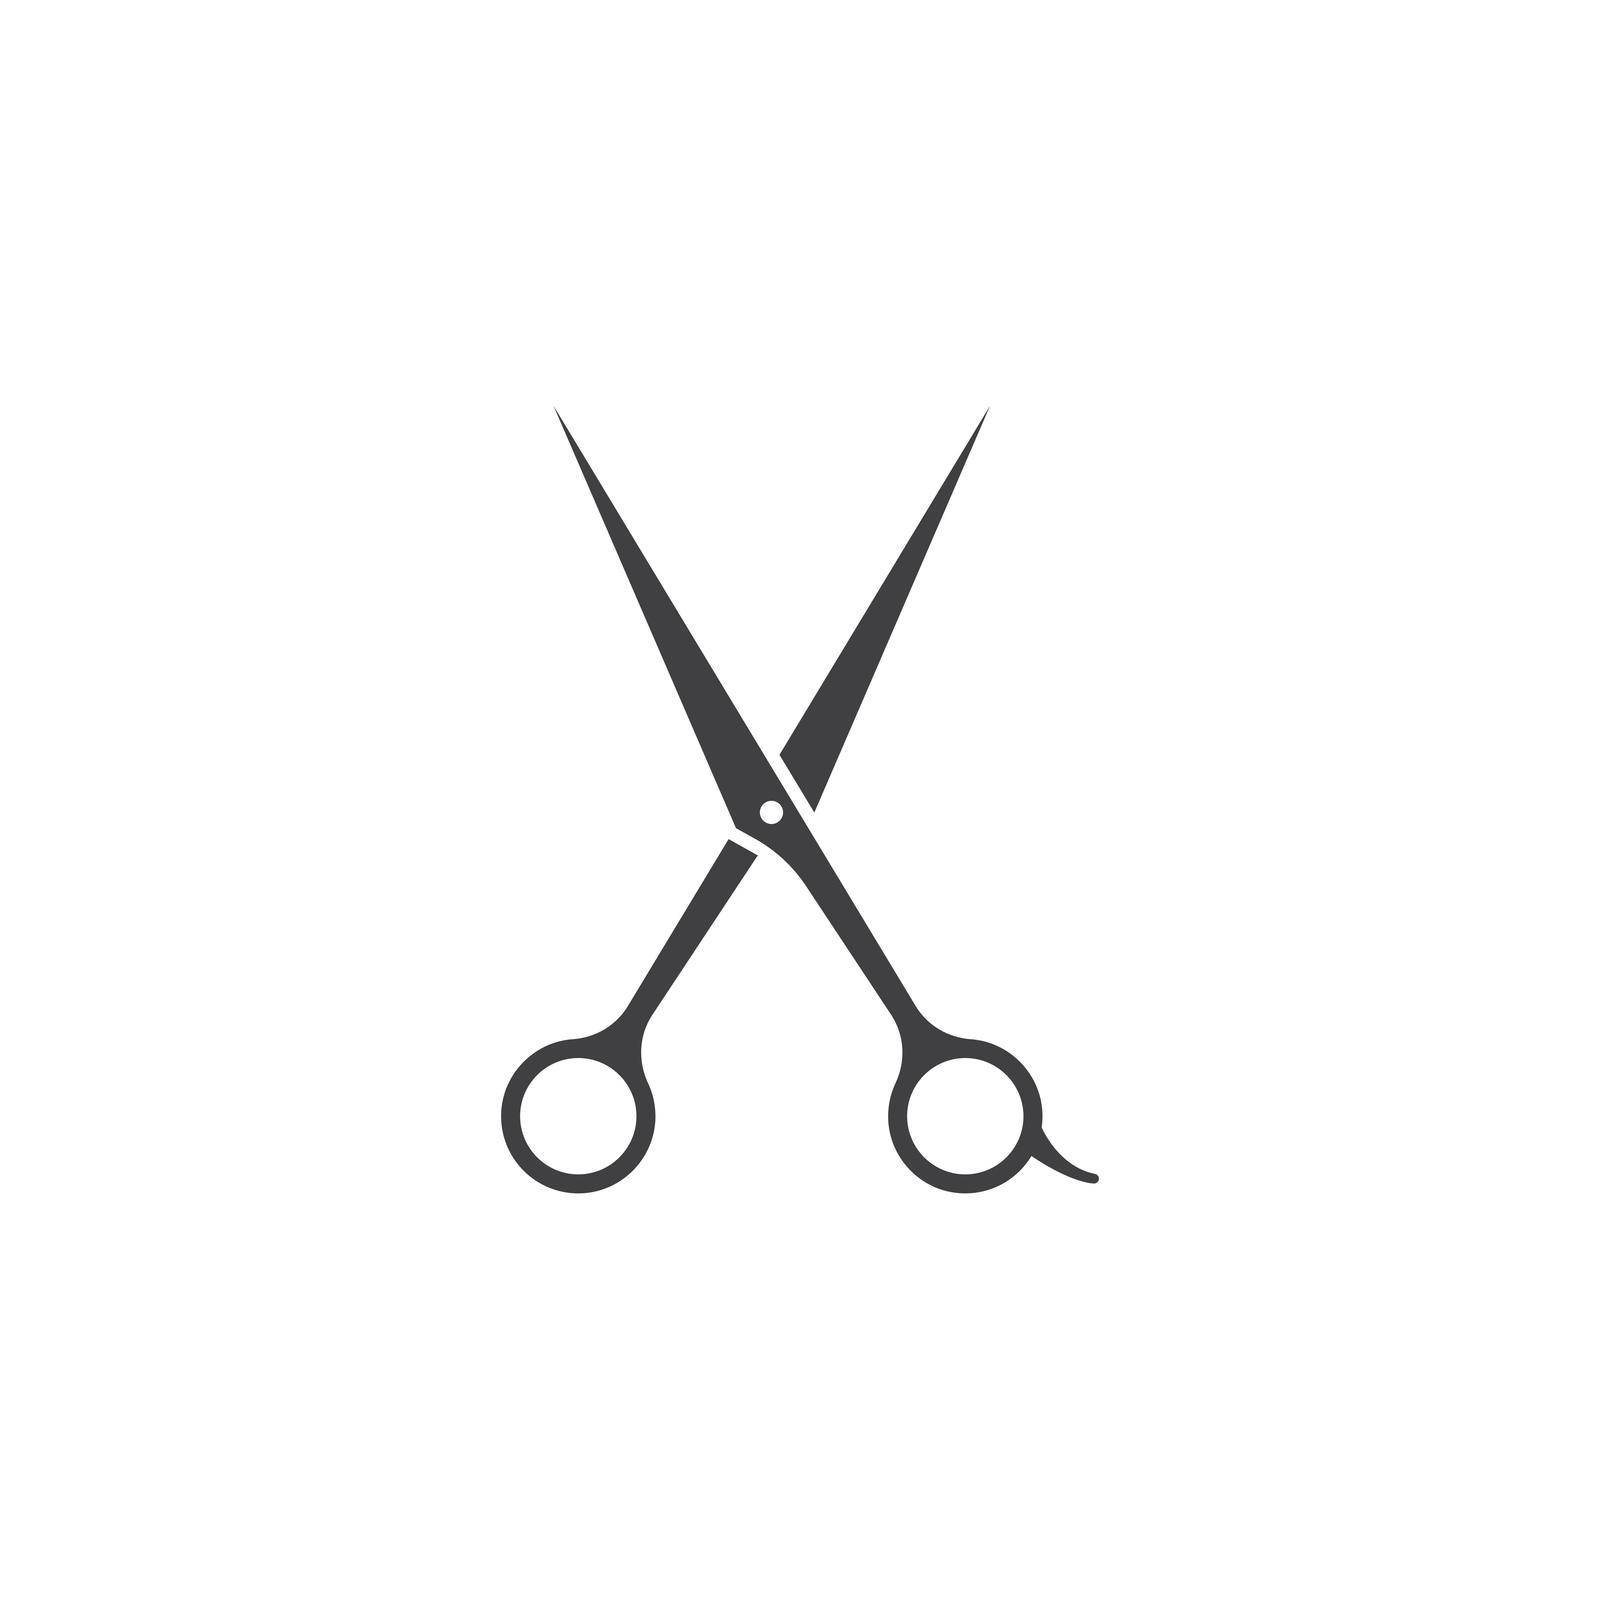 Scissor icon ilustration by awk